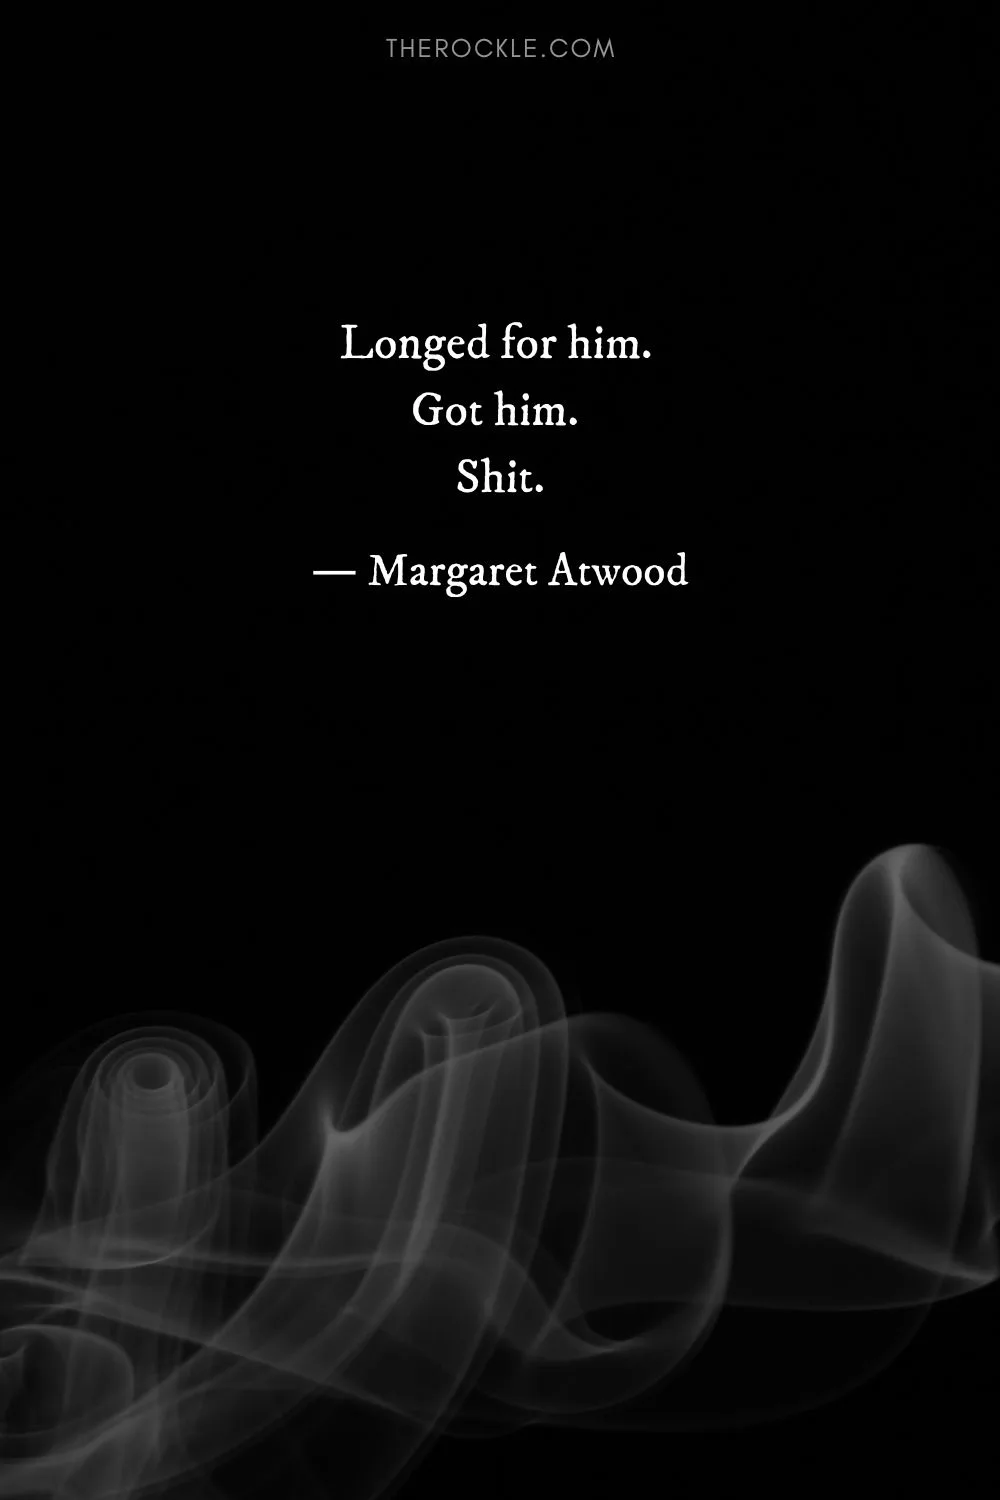  “Longed for him. Got him. Shit.” ― Margaret Atwood